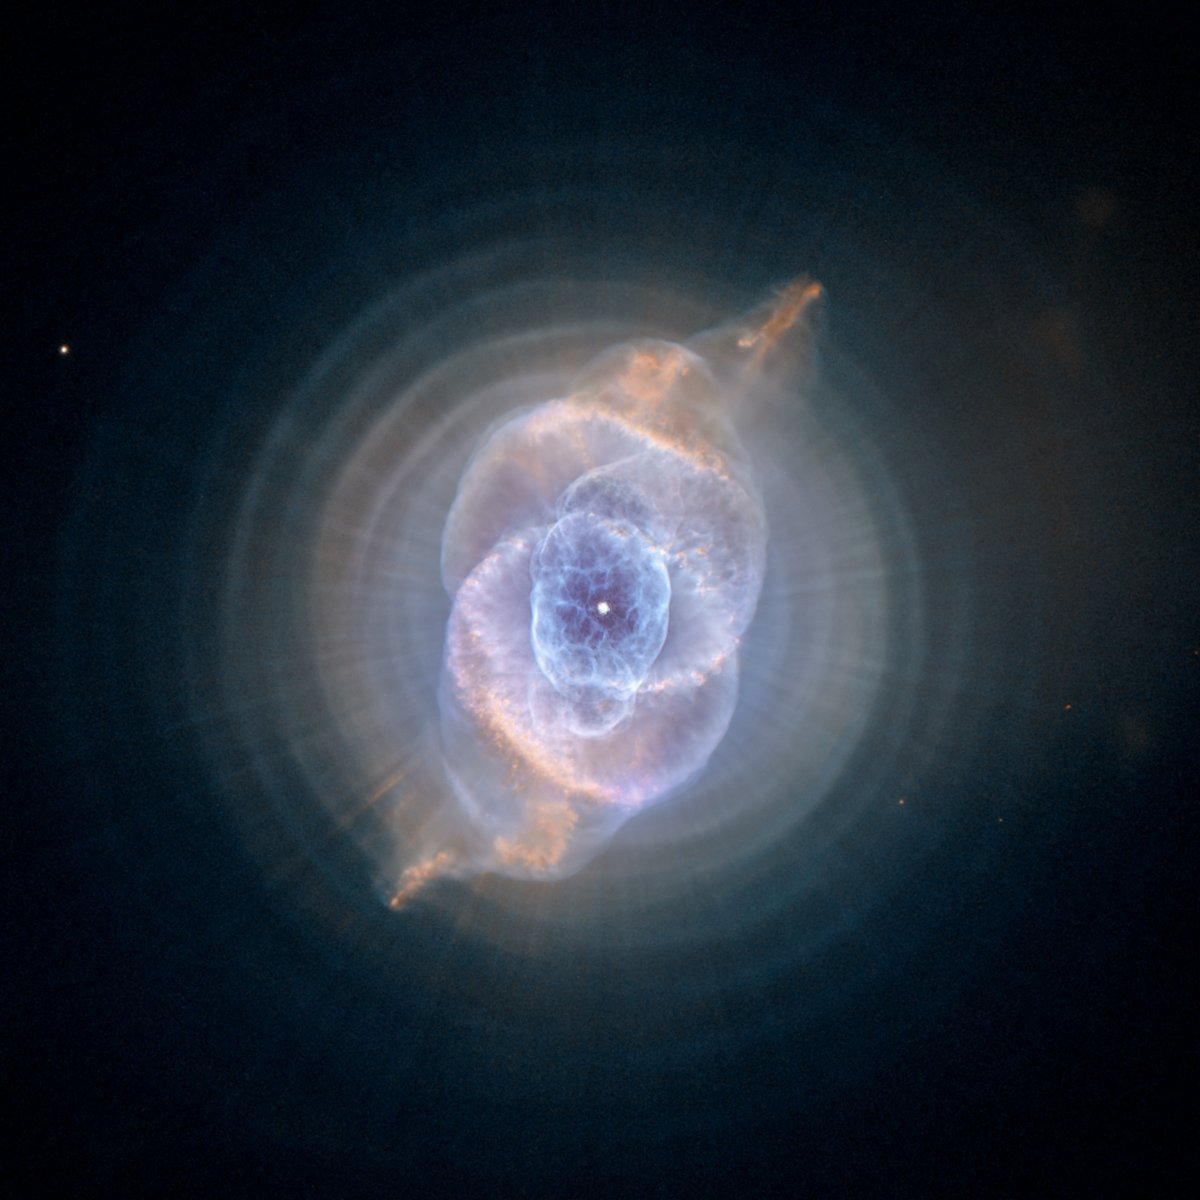 CALENDARIO HUBBLE
Nebulosa Ojo de Gato
📷 4 mayo 2002
#Astronomía #Hubble